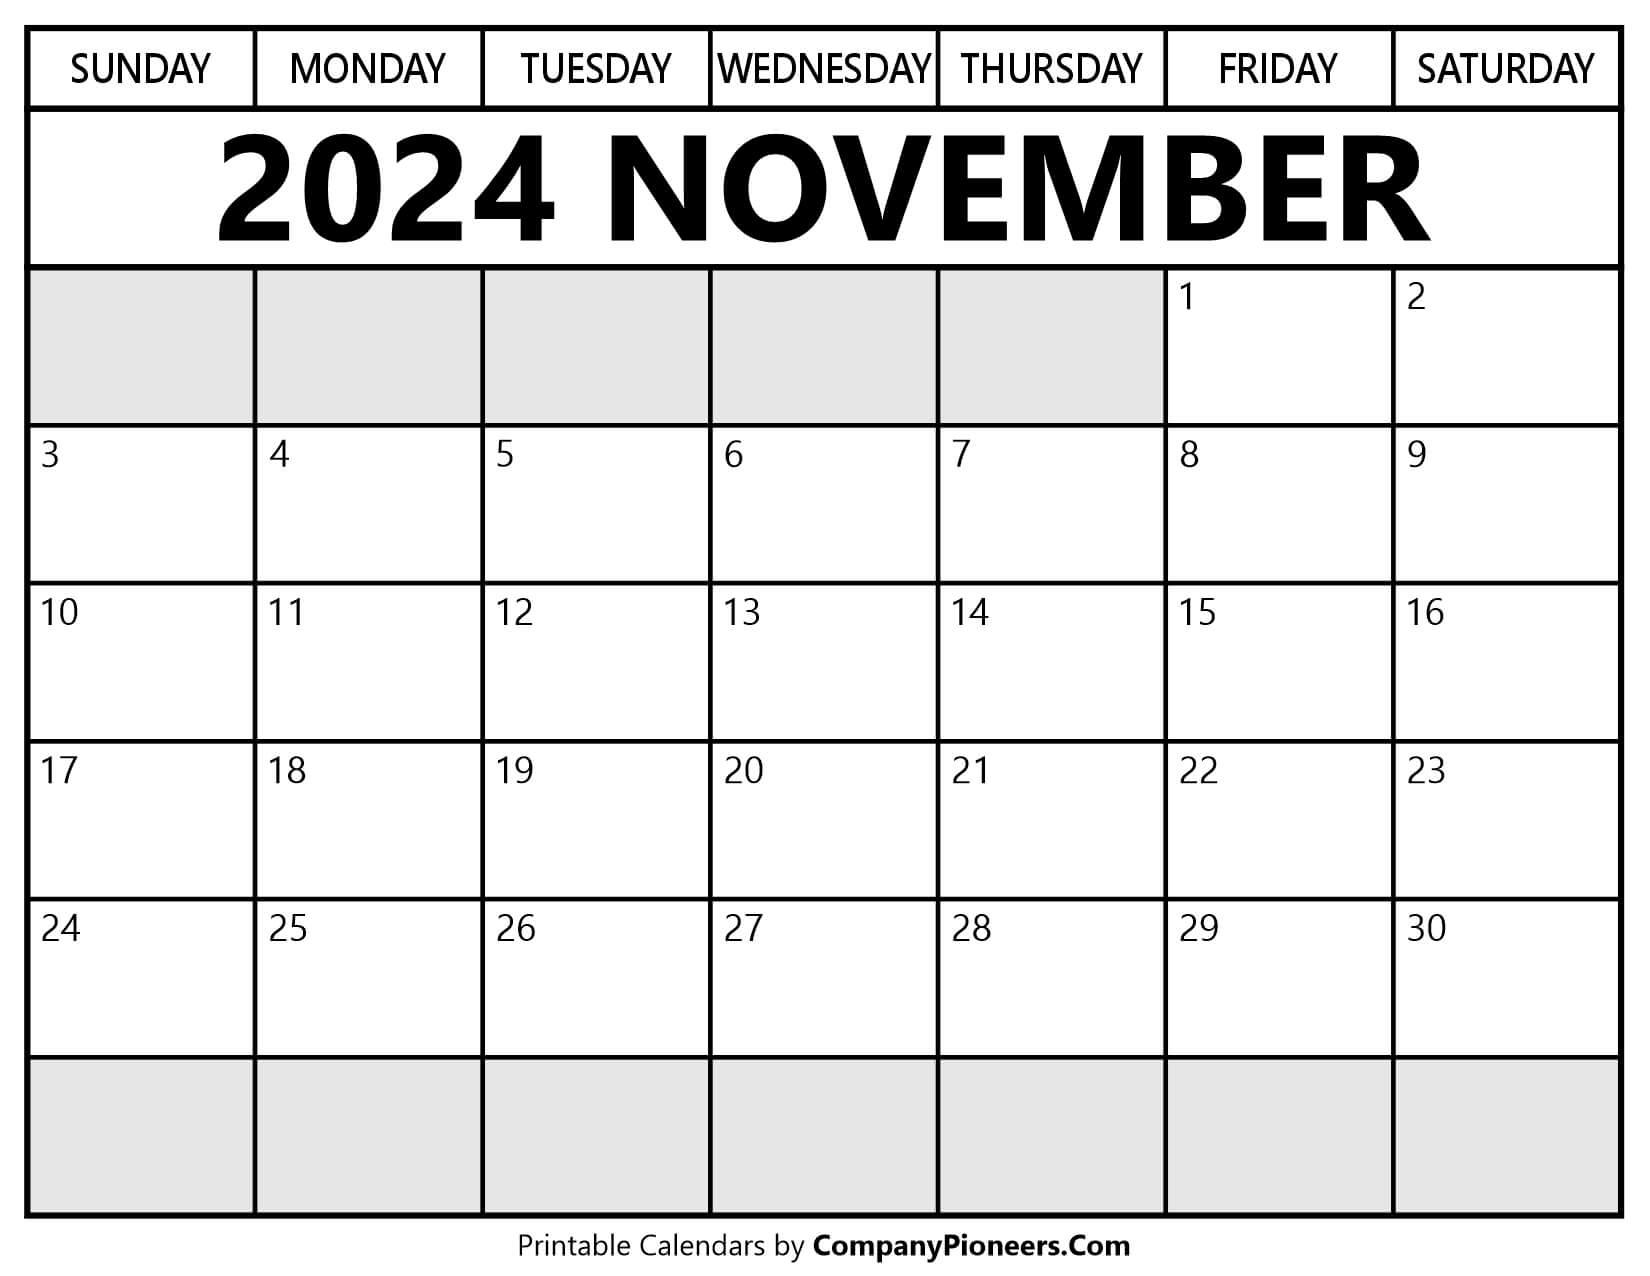 November 2024 Calendar Segoe UI Font